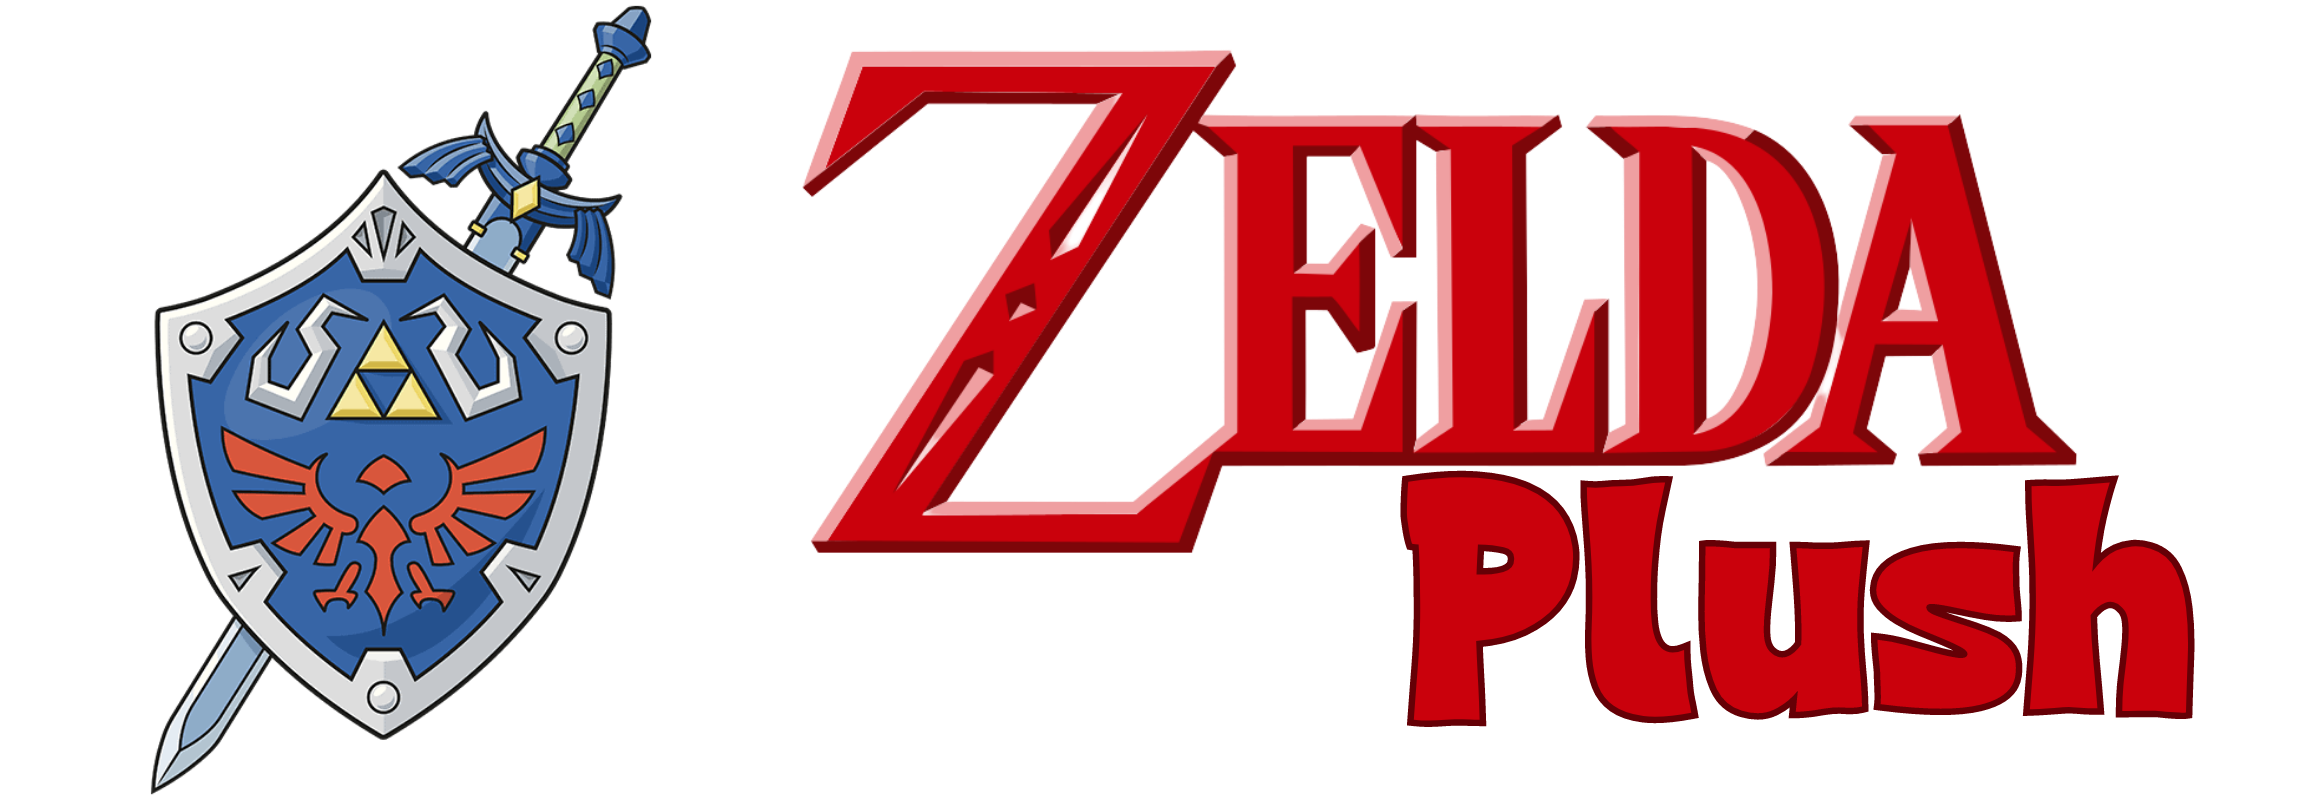 Zelda Plush